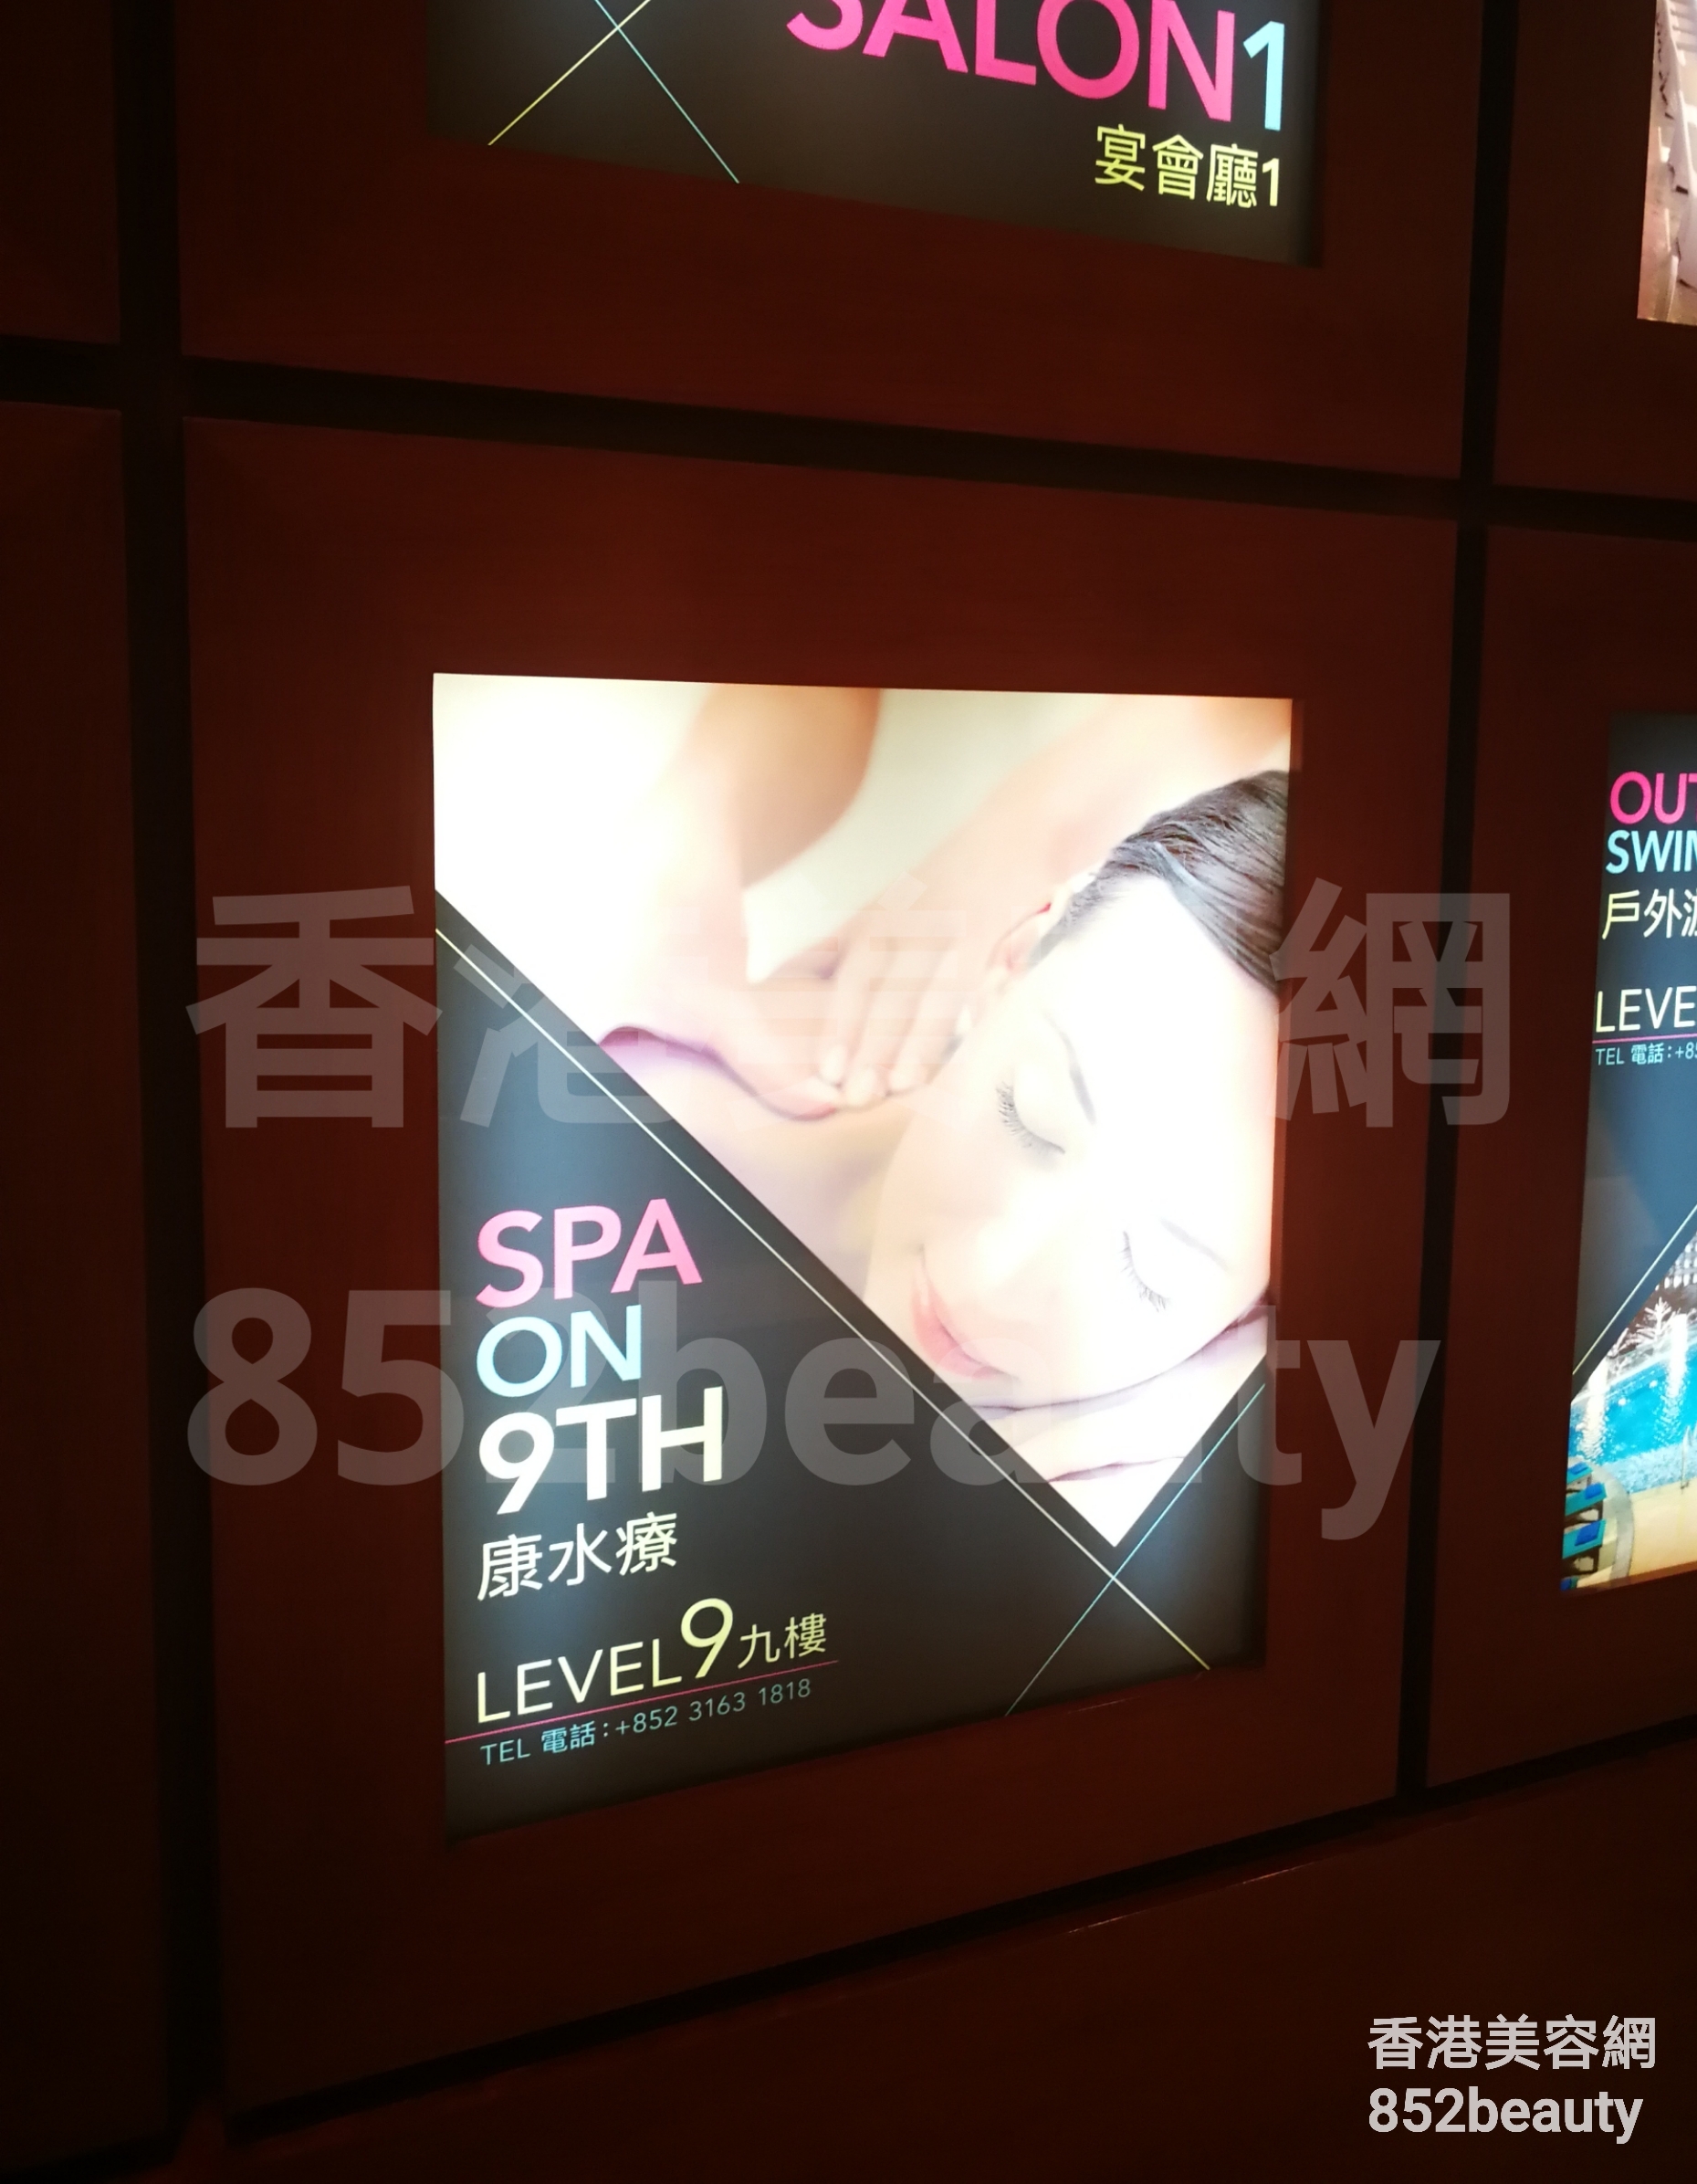 香港美容網 Hong Kong Beauty Salon 美容院 / 美容師: 康水療 Spa On The 9th